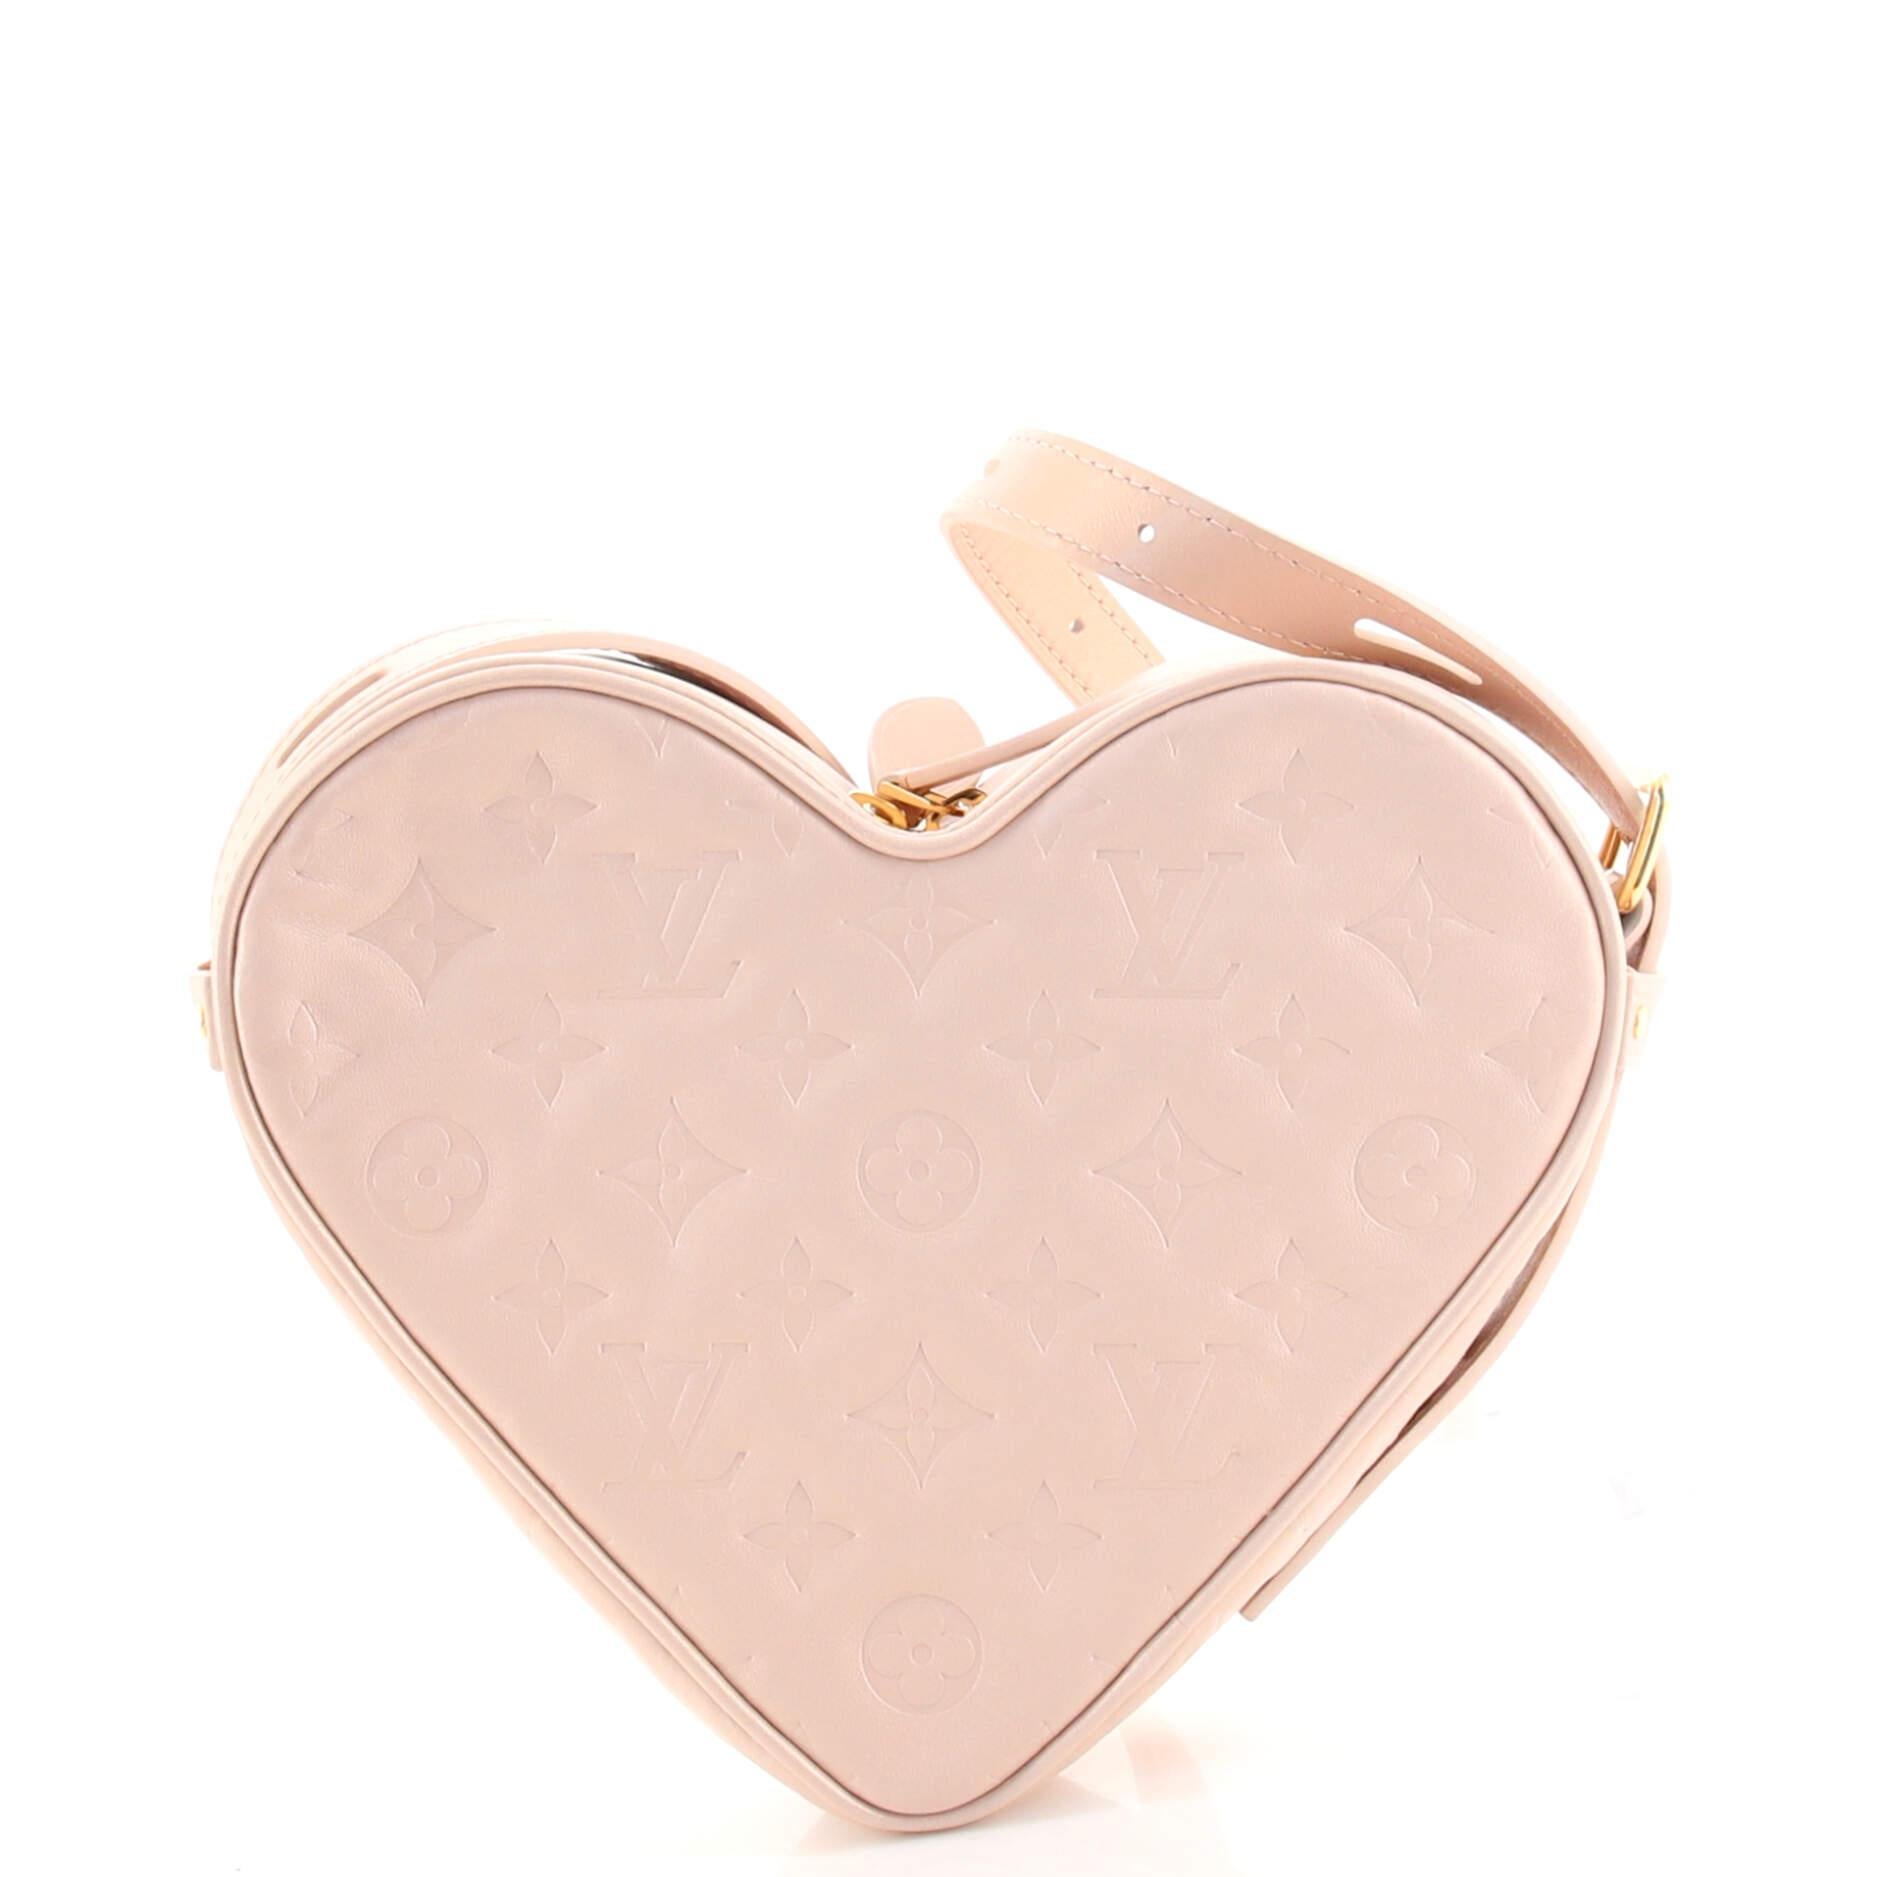 Beige Louis Vuitton Coeur Handbag Limited Edition Fall in Love Monogram 